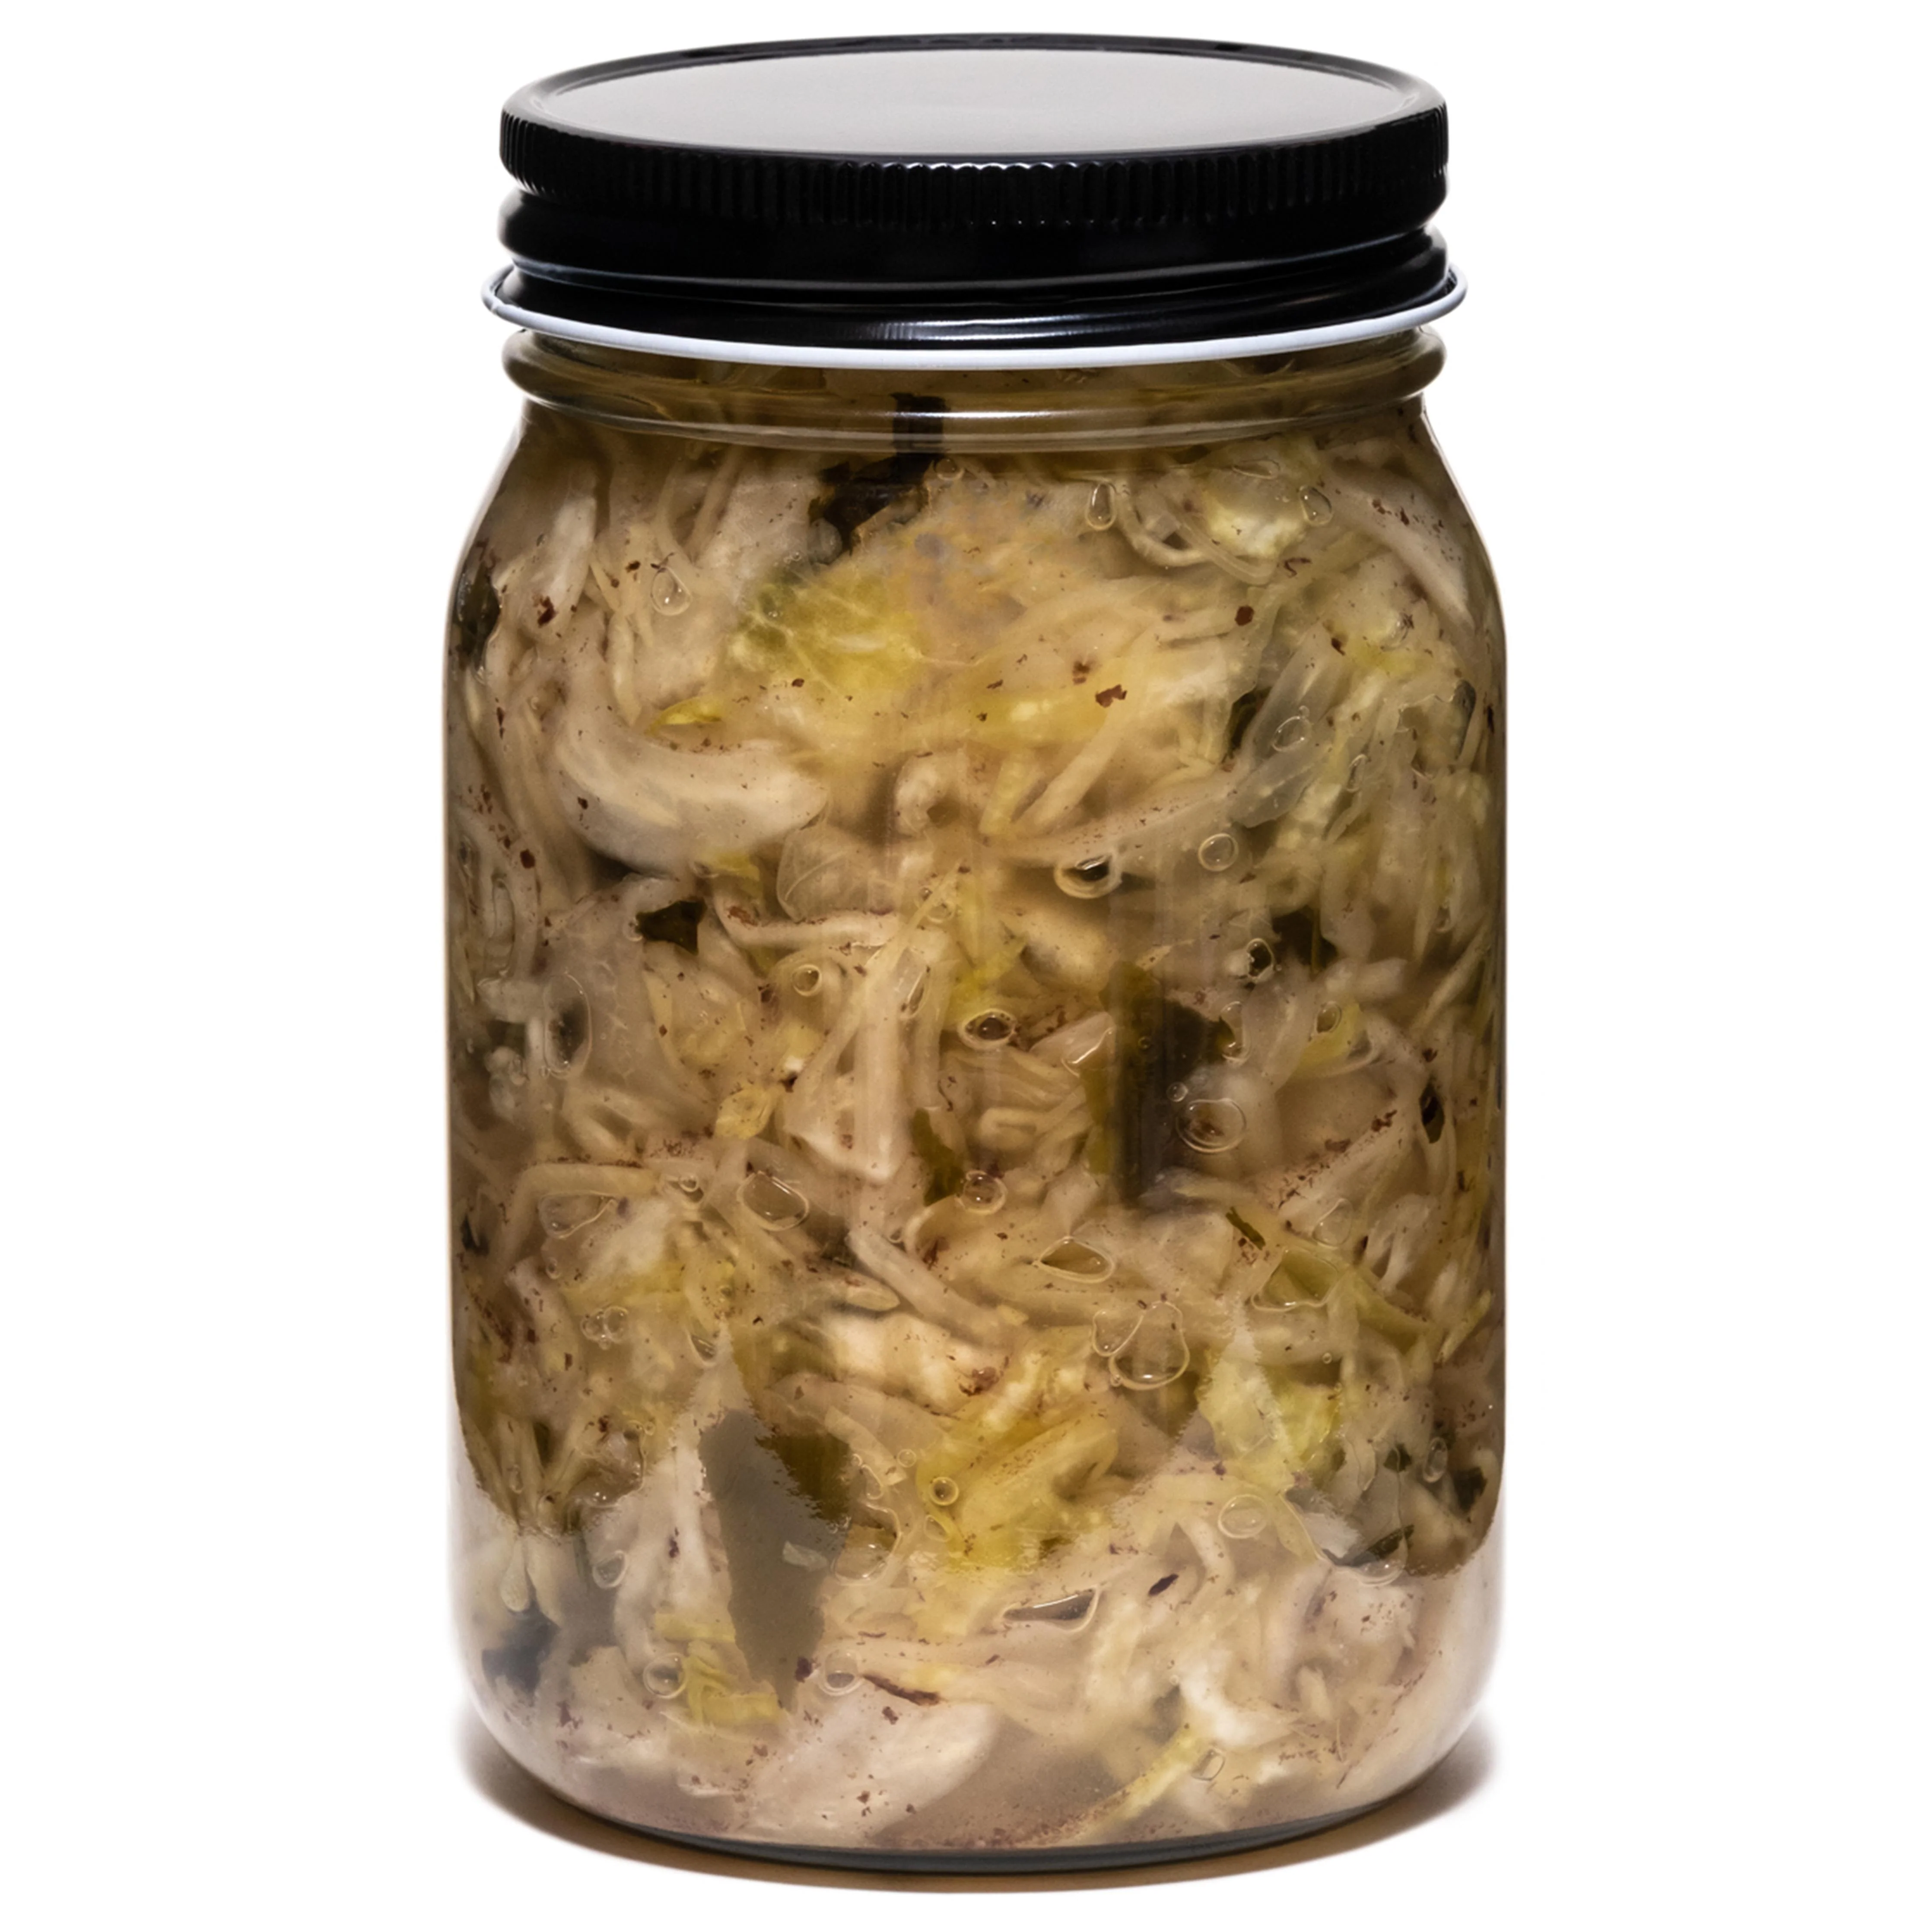 Organic seaweed sauerkraut - Sirena - Tout cru! Fermentation